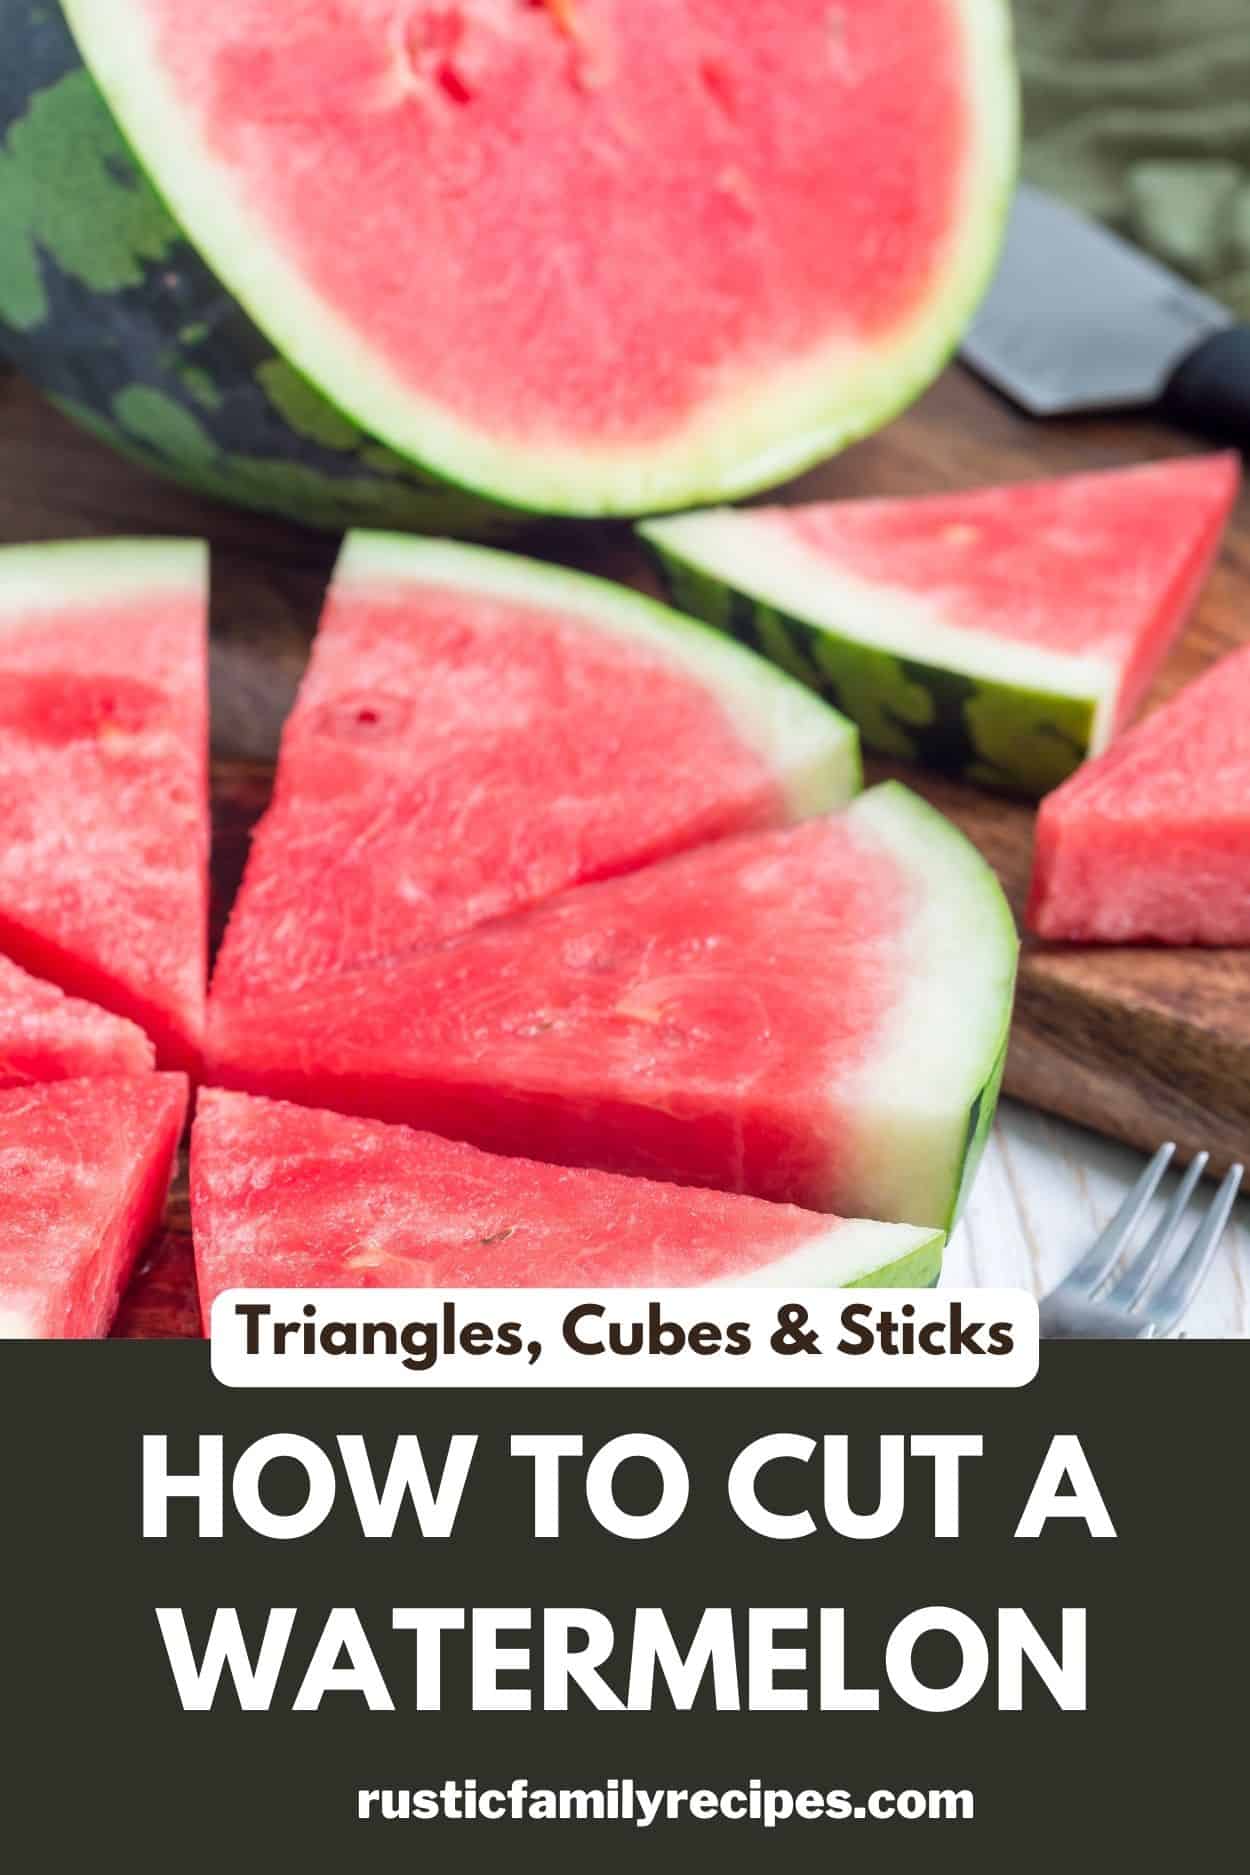 Watermelon triangles next to a watermelon cut in half